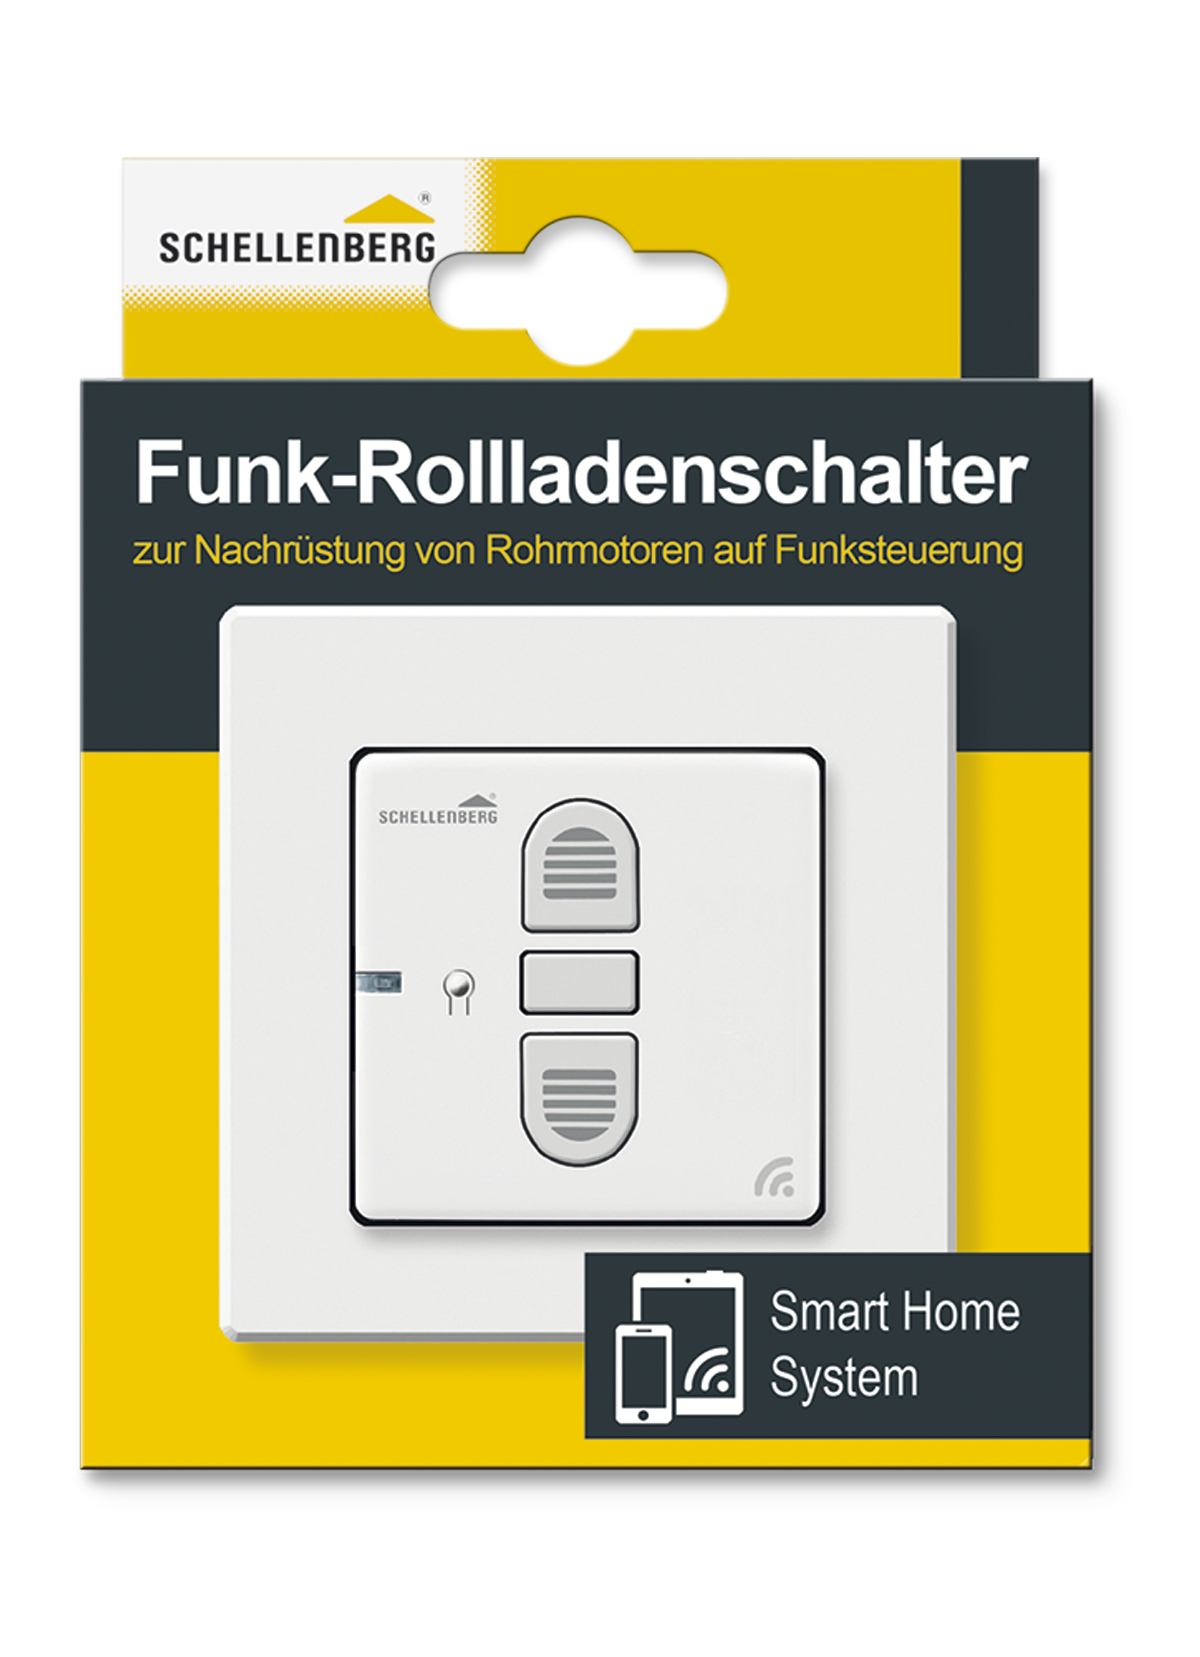 Schellenberg 20030 Smart Home Funk-Rolladenschalter & Funk-Raffstoreschalter